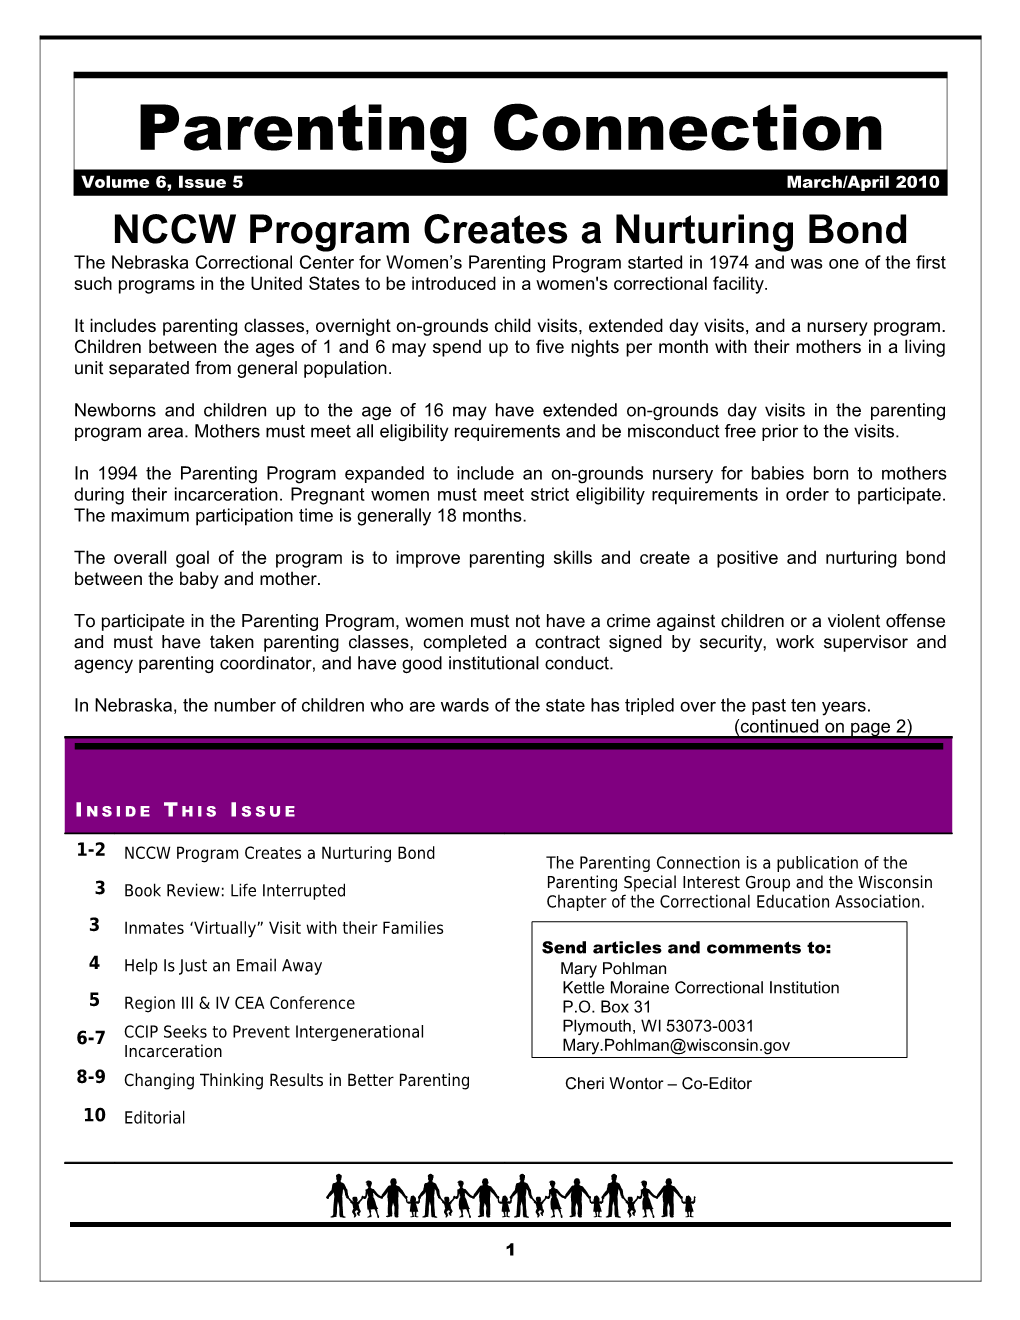 NCCW Program Creates a Nurturing Bond